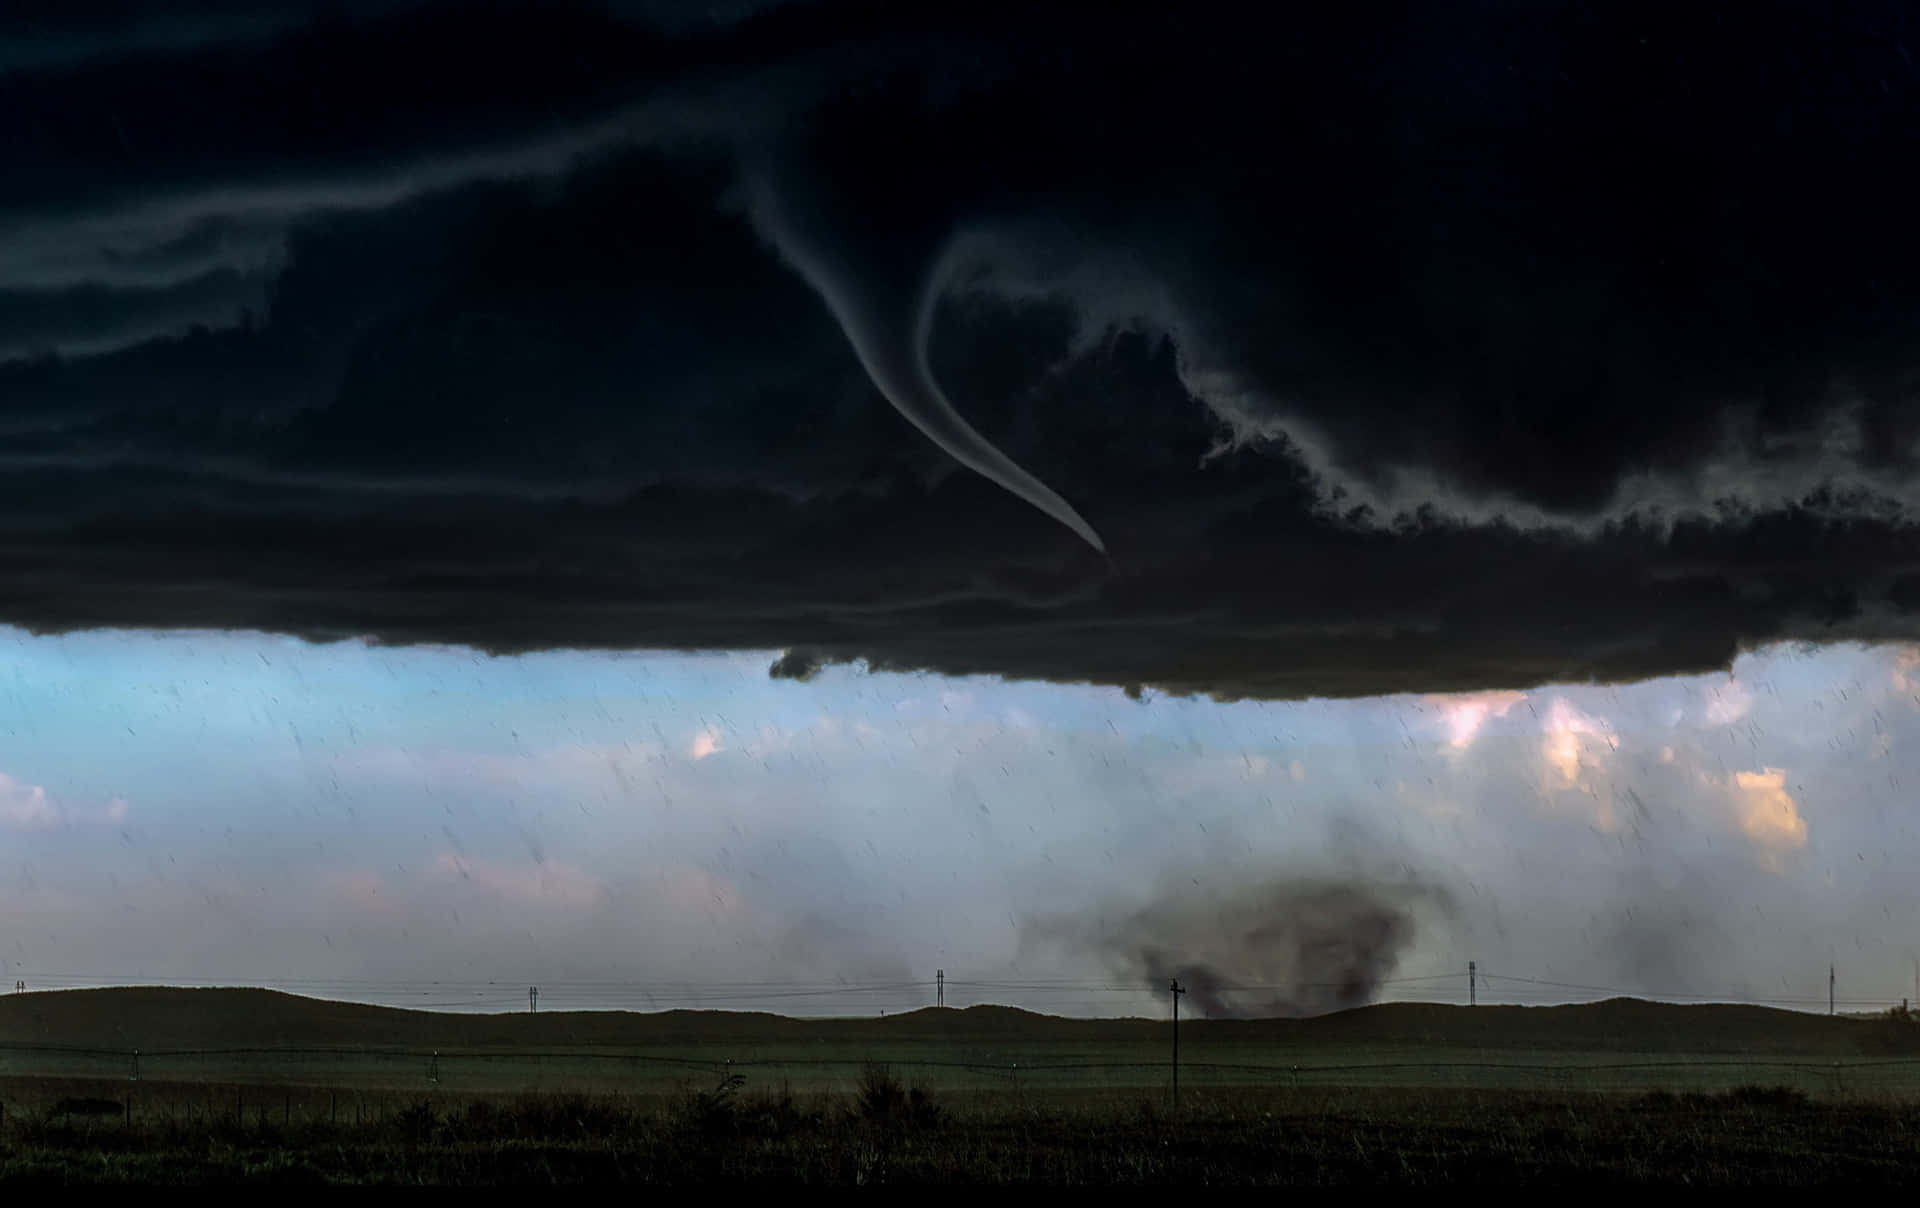 A powerful tornado sweeping across the vast landscape